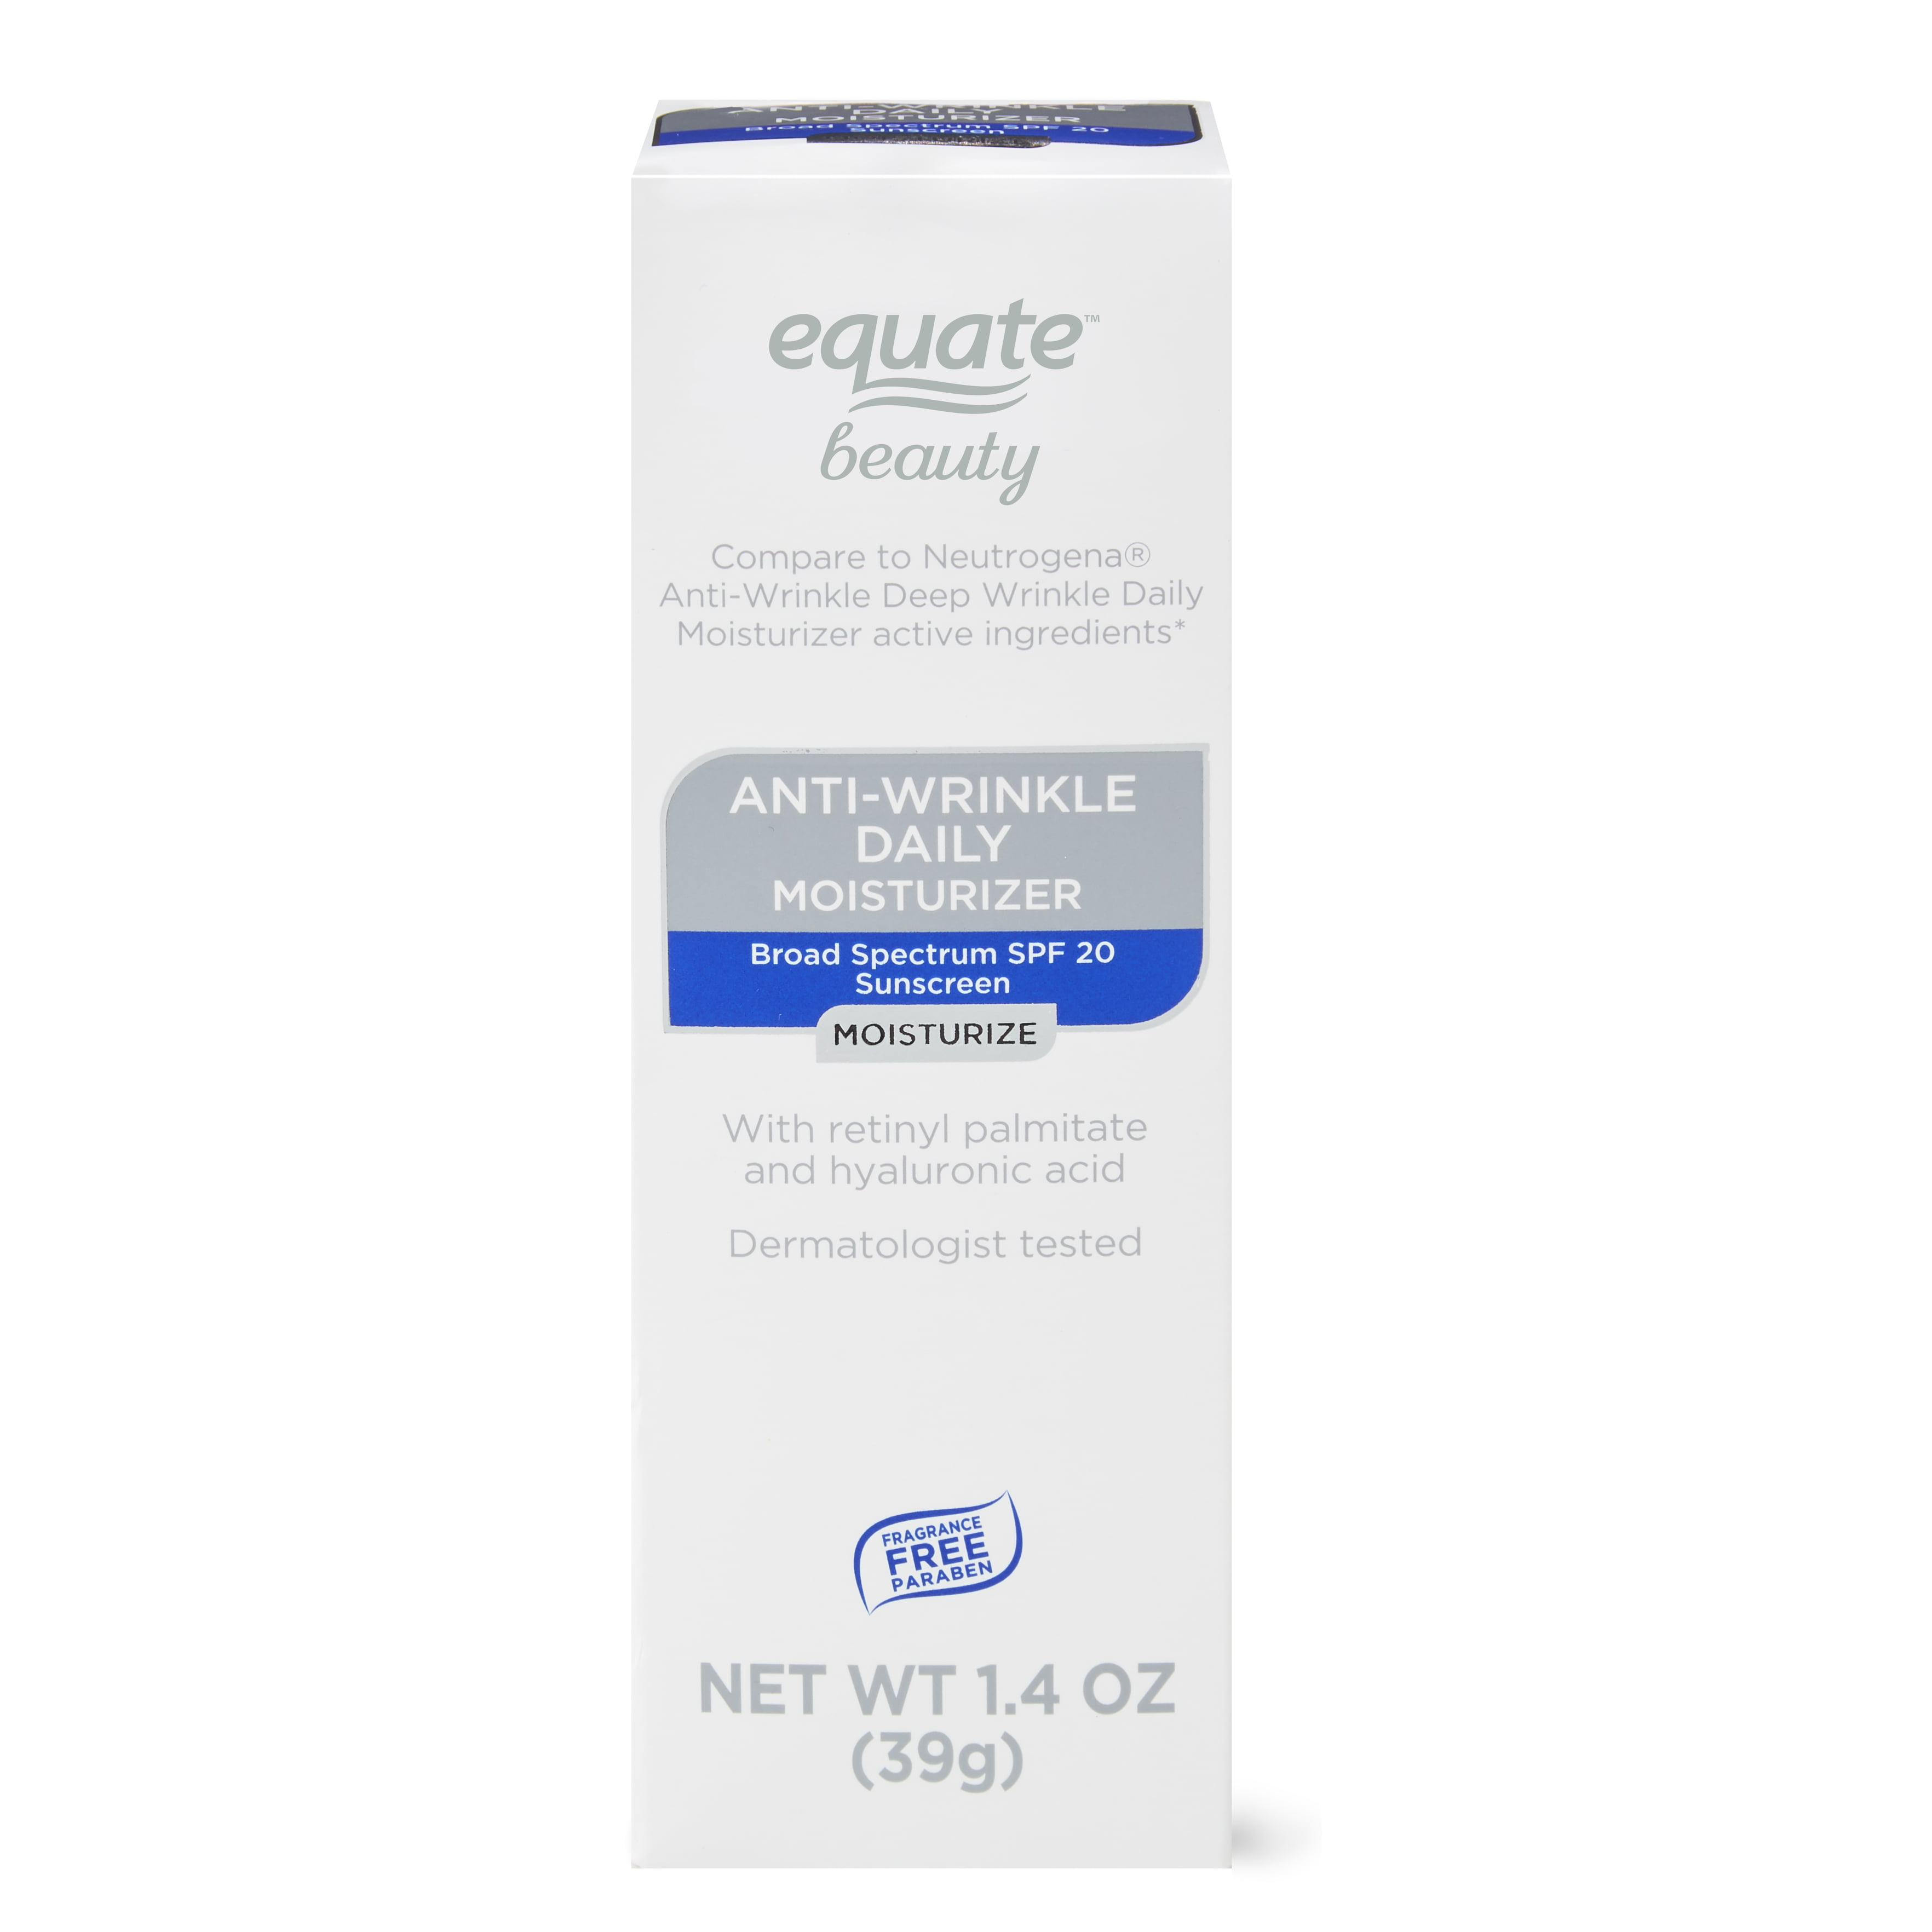 equate anti wrinkle daily moisturizer)